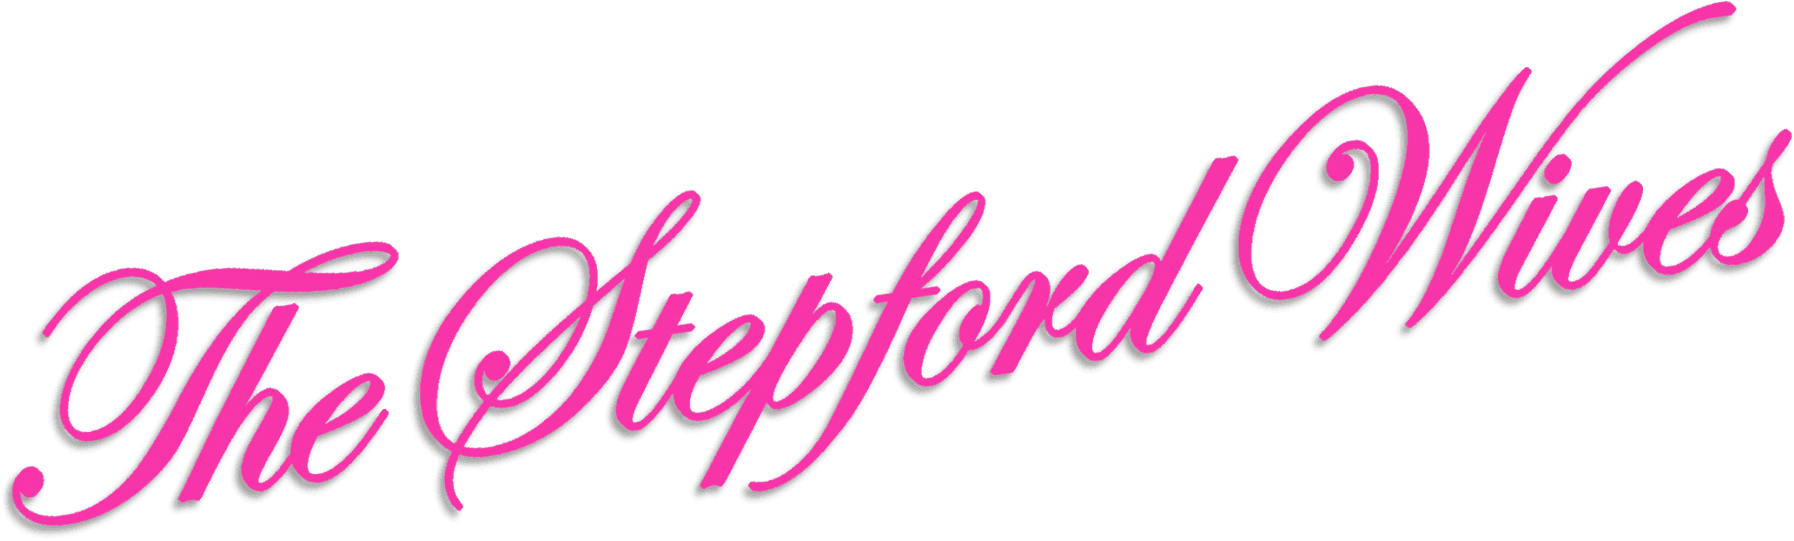 The Stepford Wives logo